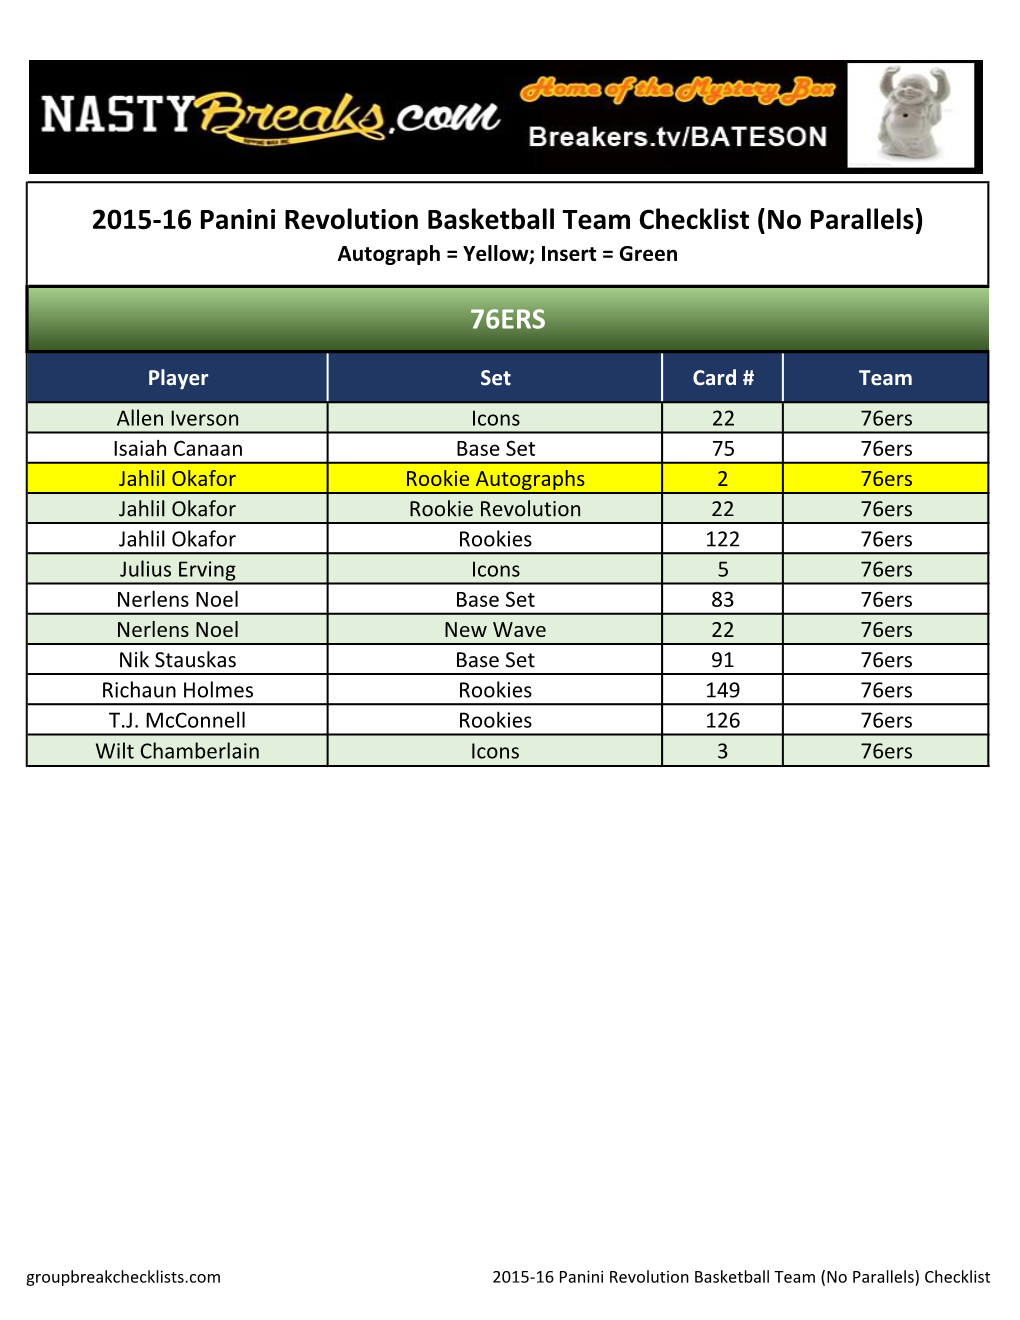 2015-16 Panini Revolution Basketball Checklist;